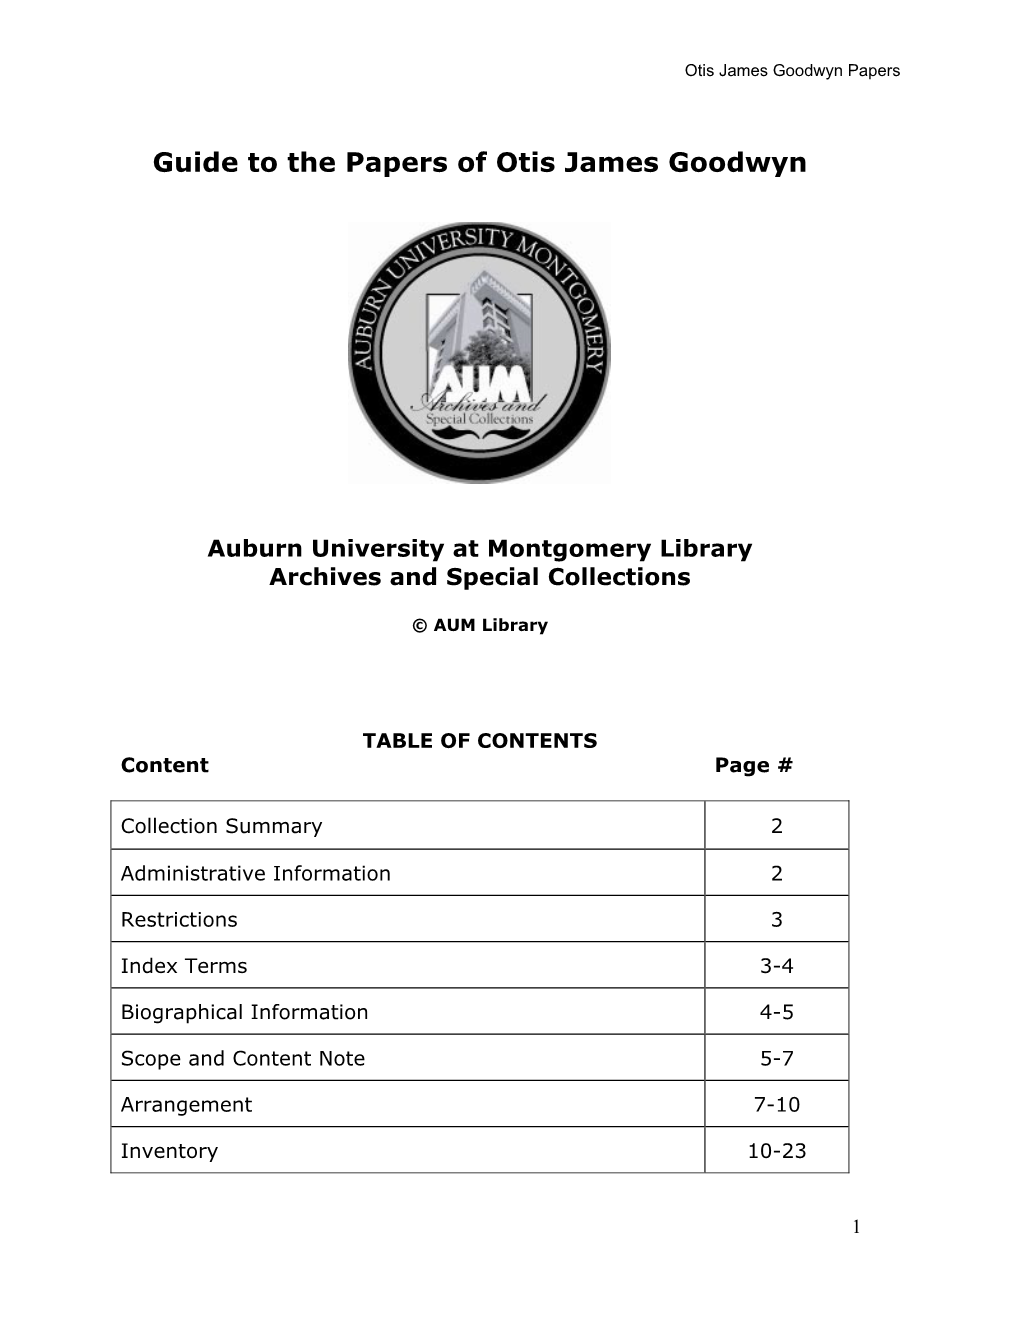 Otis James Goodwyn Papers, 1952-1973